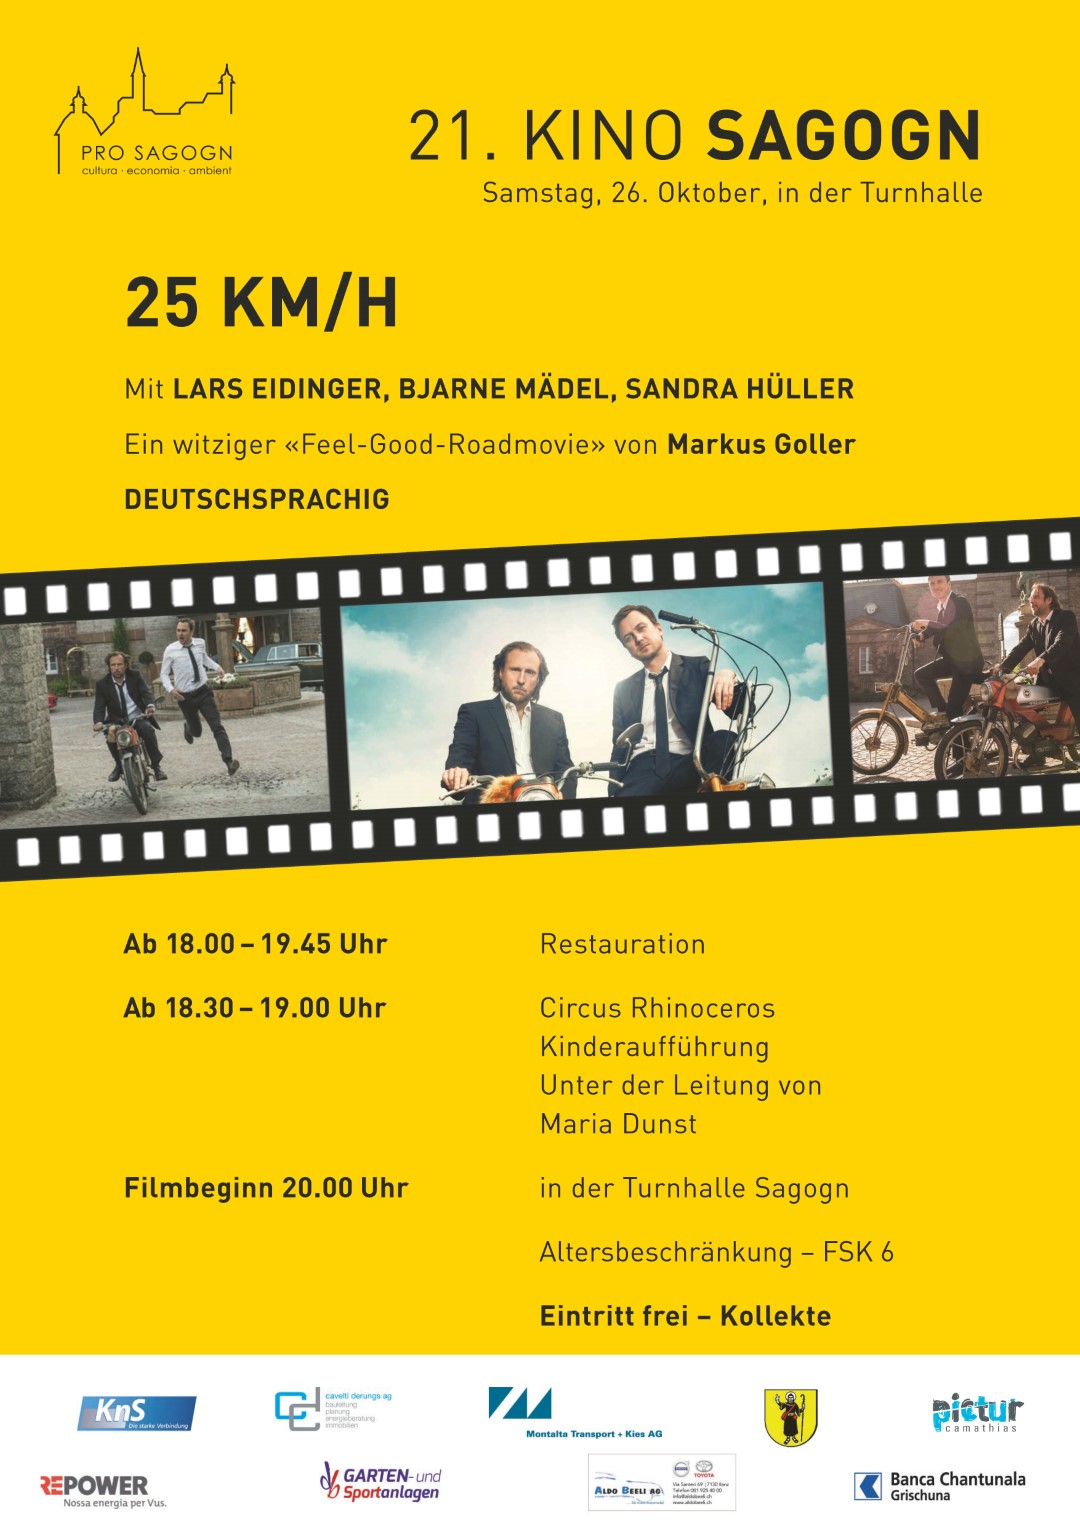 Plakat A3 Kino Pro Sagogn 2019 G z D 03 1 Groß